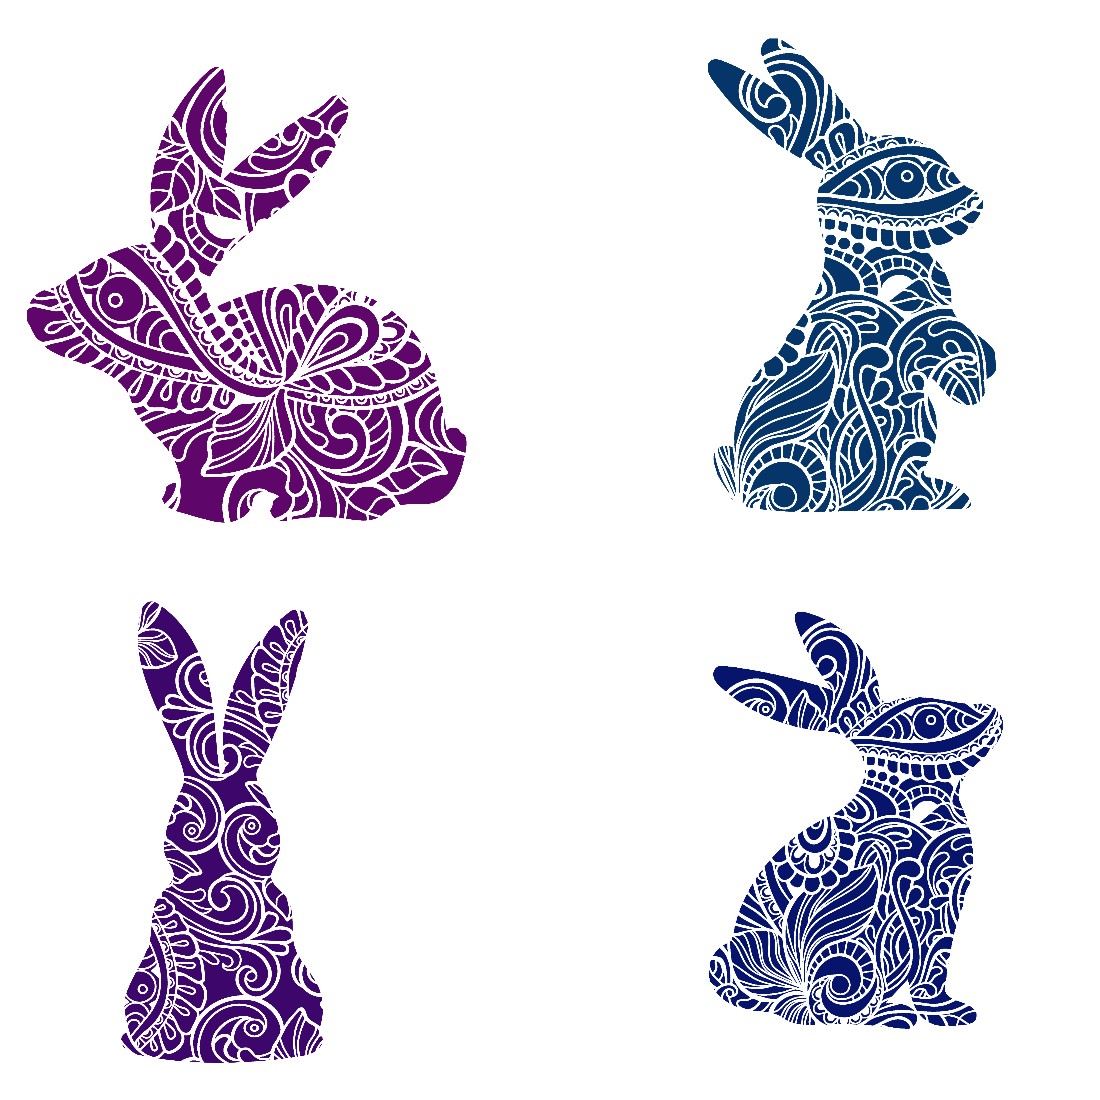 Decorative Bunny Set of 6 Stickers Muliti Colored SVG Files cover image.